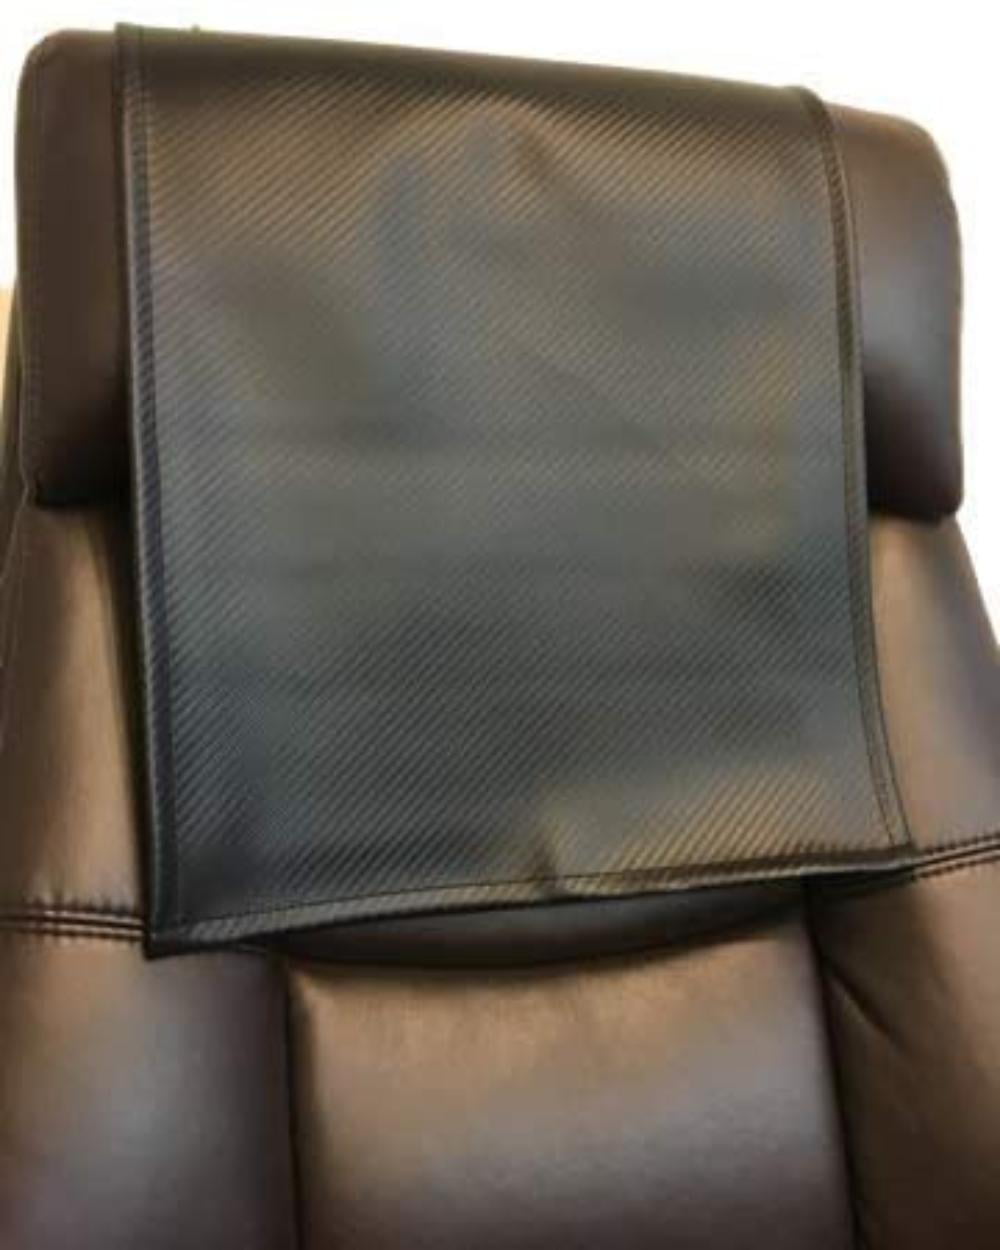 Recliner Sofa Love seat Chaise Head Rest Cover Furniture Vinyl Black Nile 14x30 